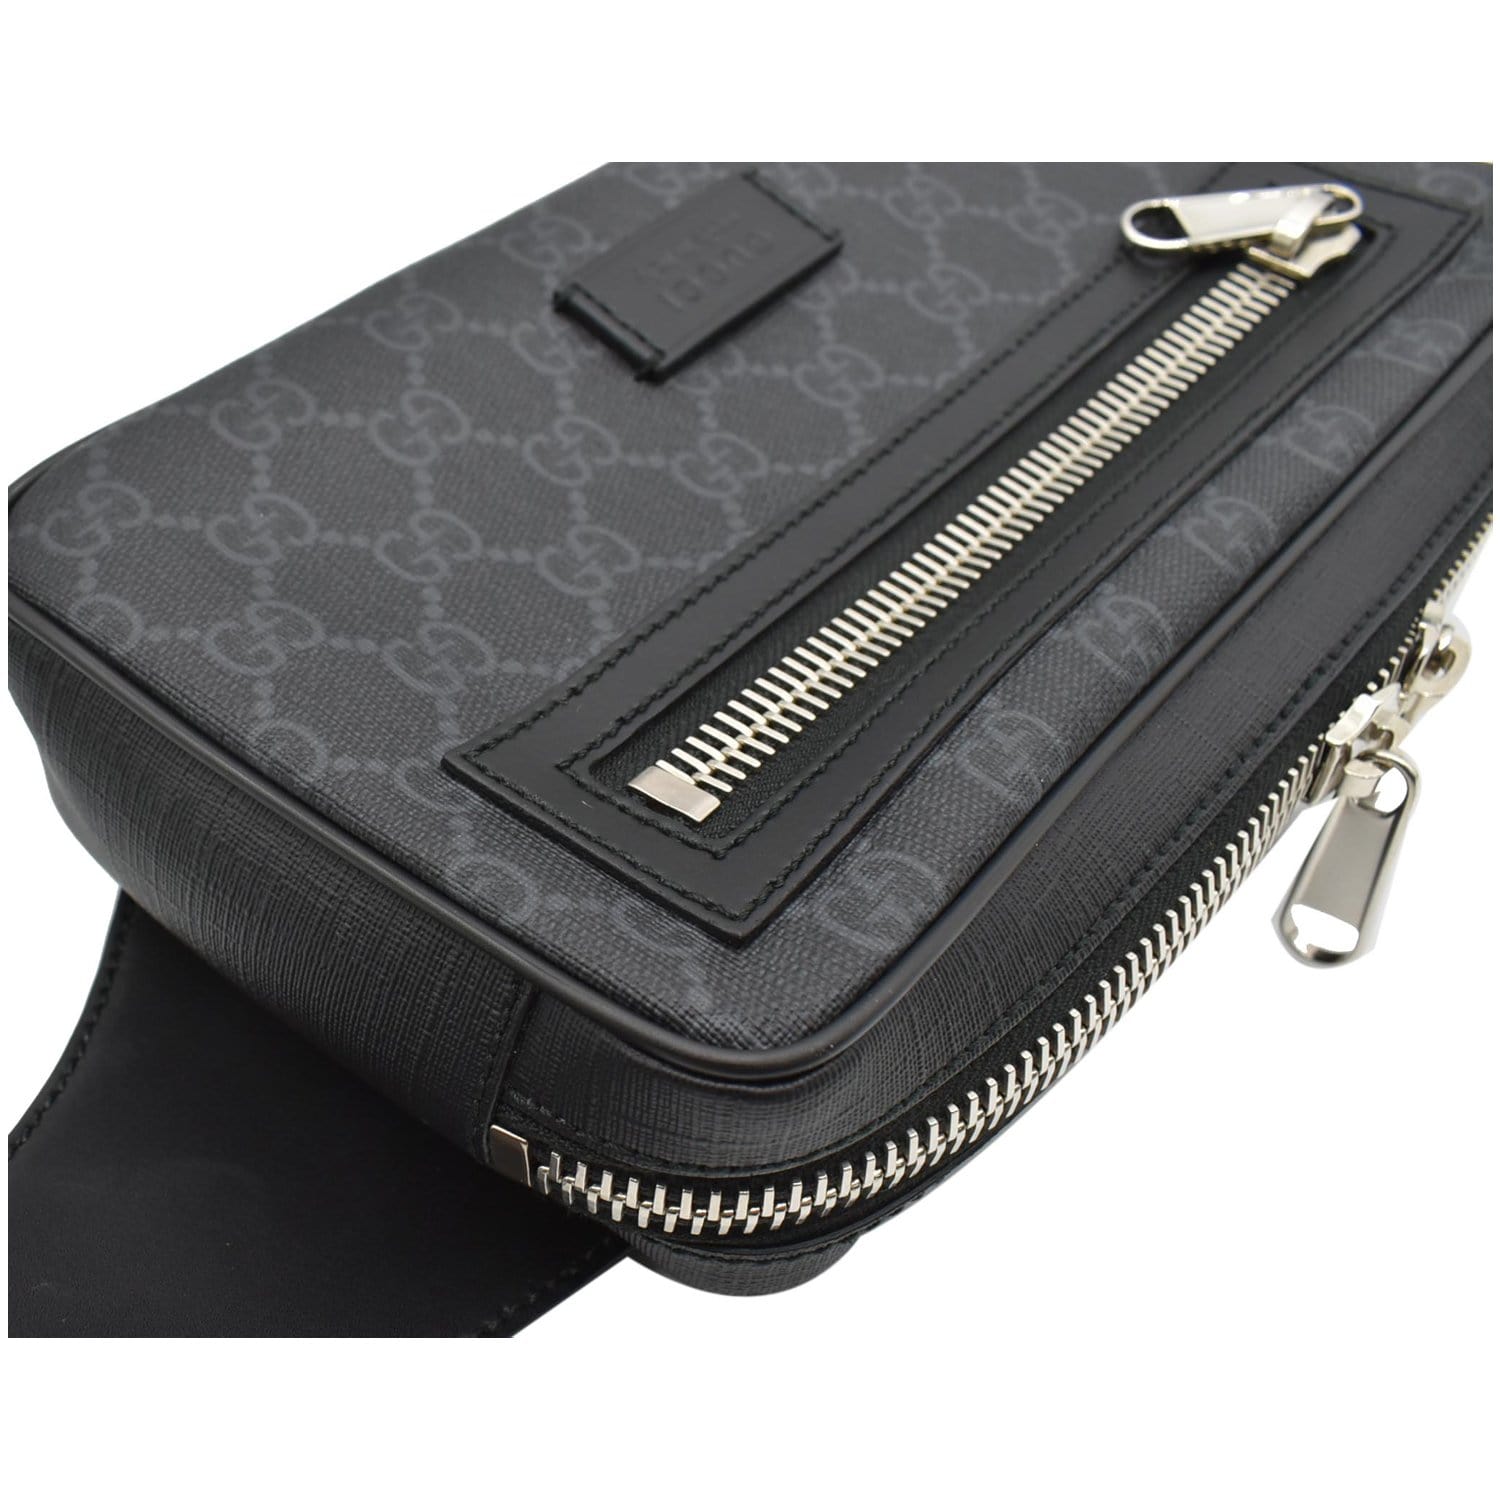 Gucci Soft GG Supreme Belt Bag - Black